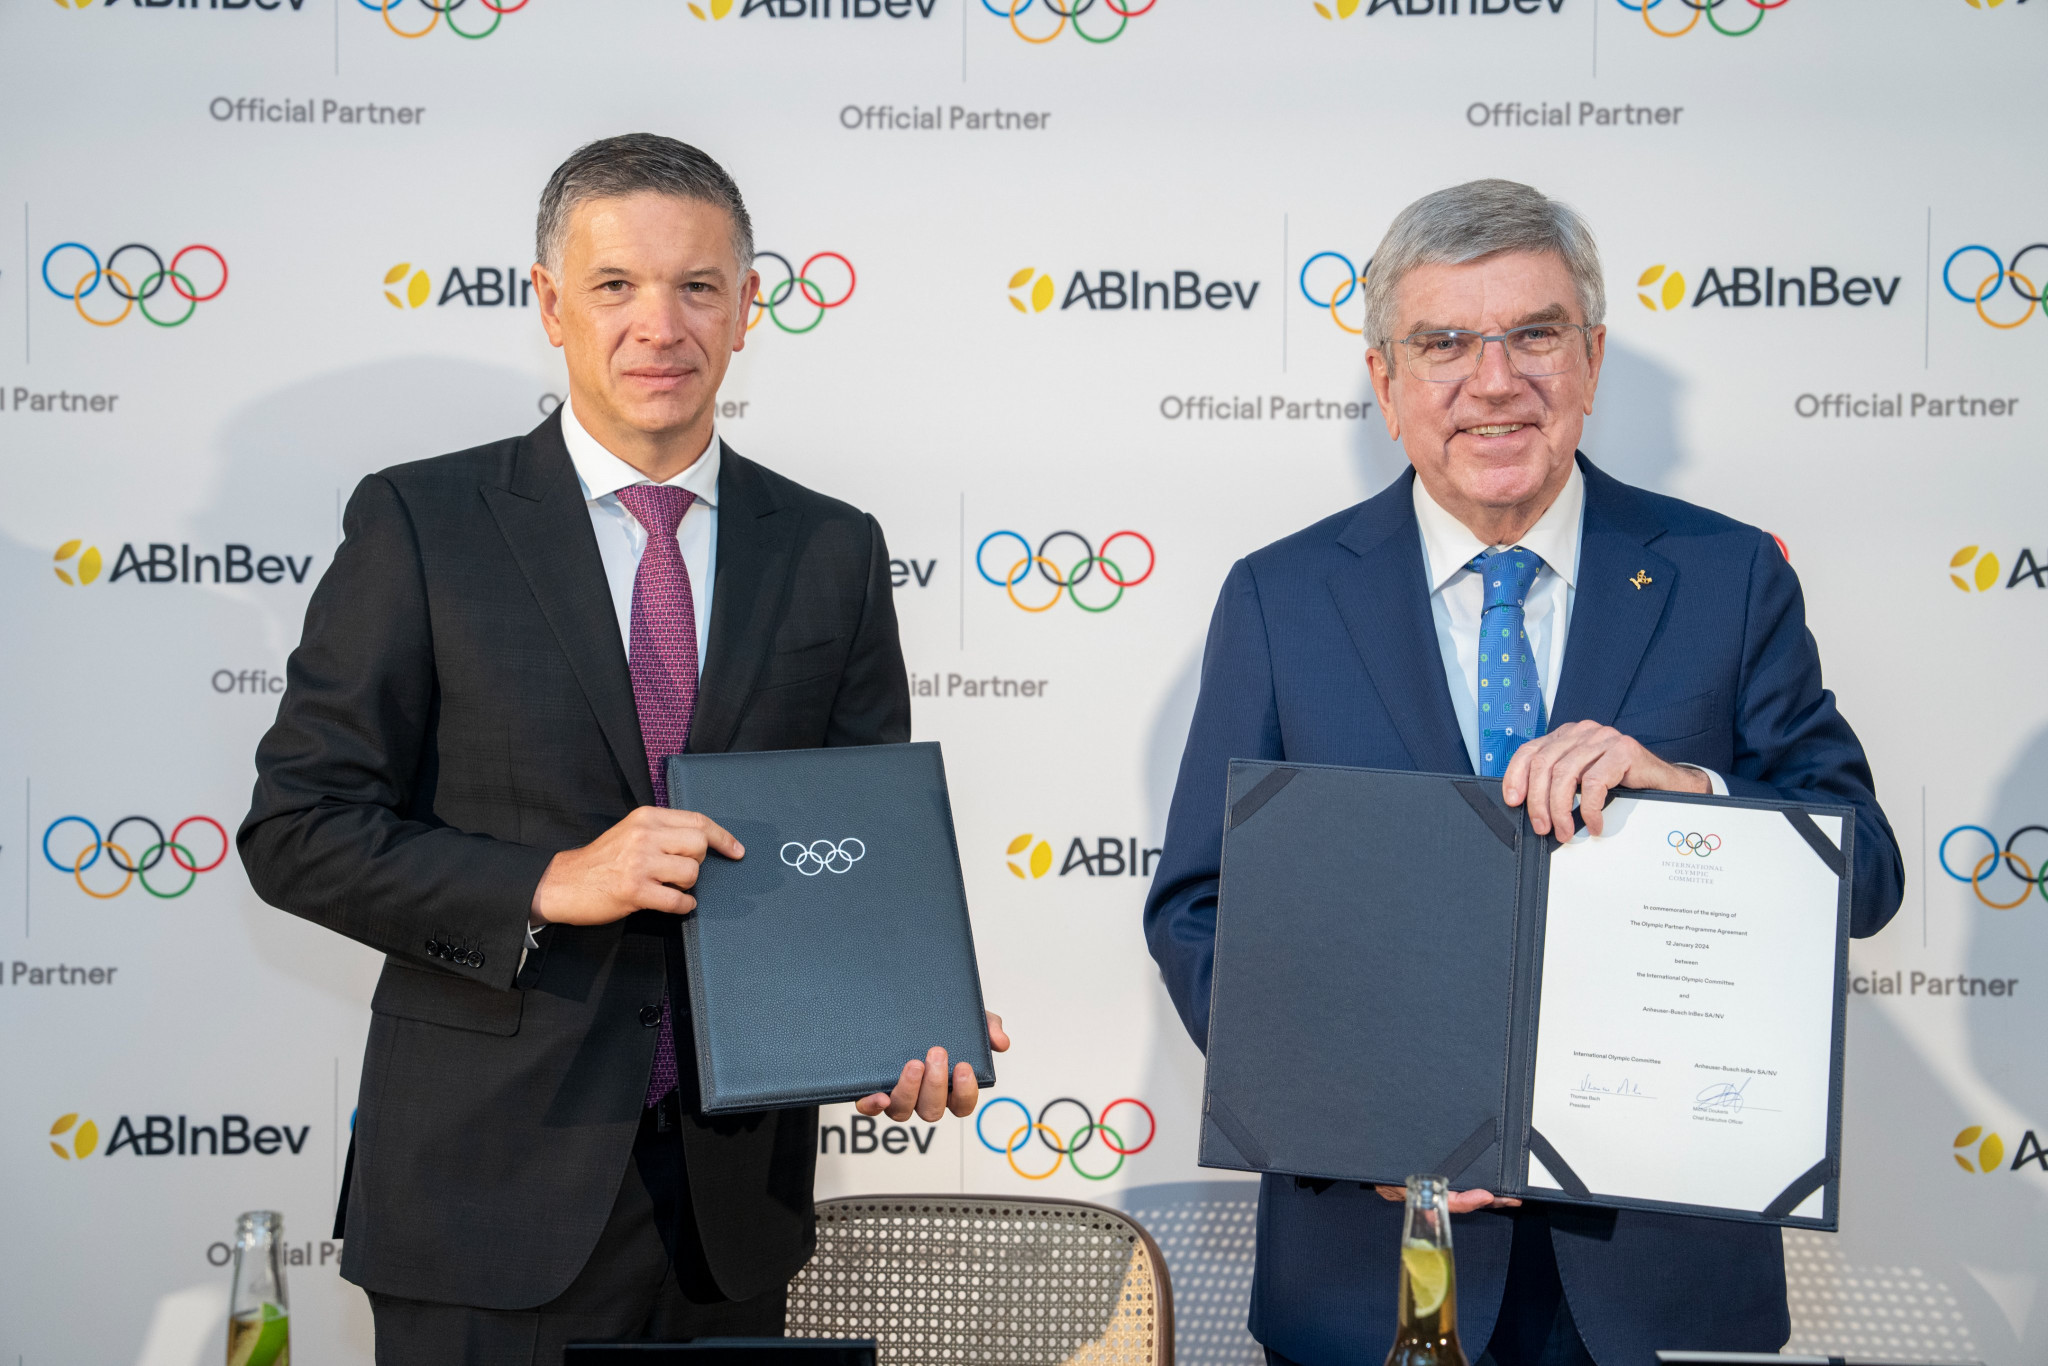 IOC President Thomas Bach and AB InBev CEO Michel Doukeris. IOC